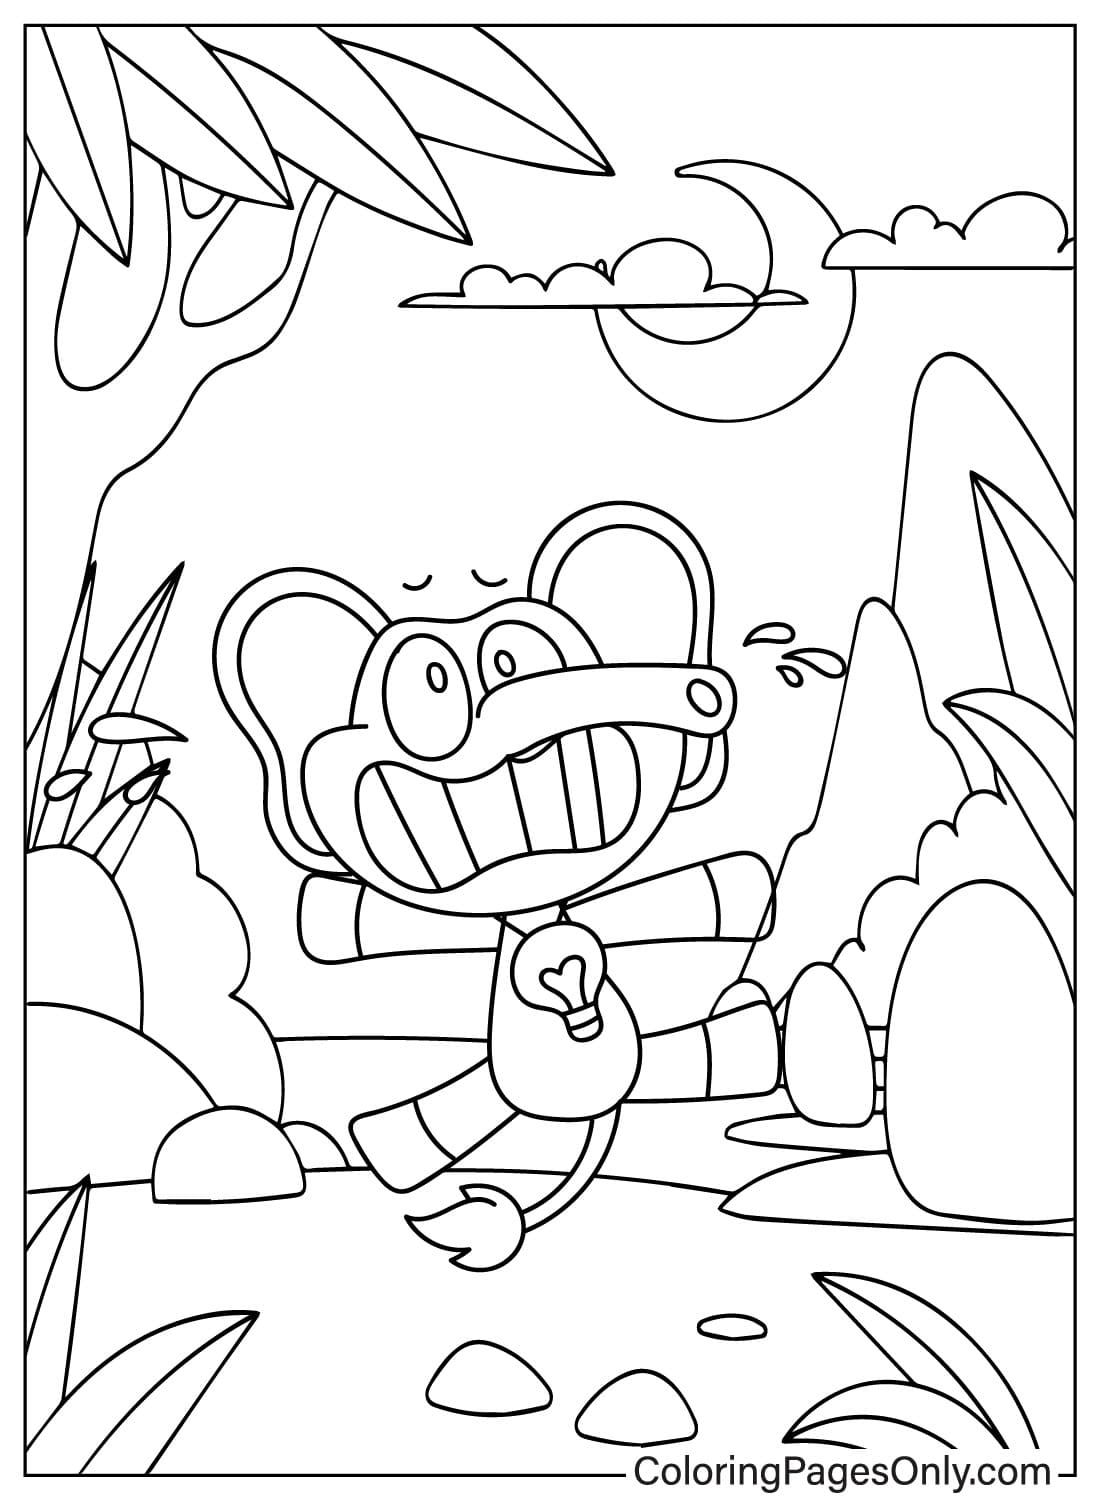 Página para colorir assustada de Bubba Bubbaphant de Smiling Critters